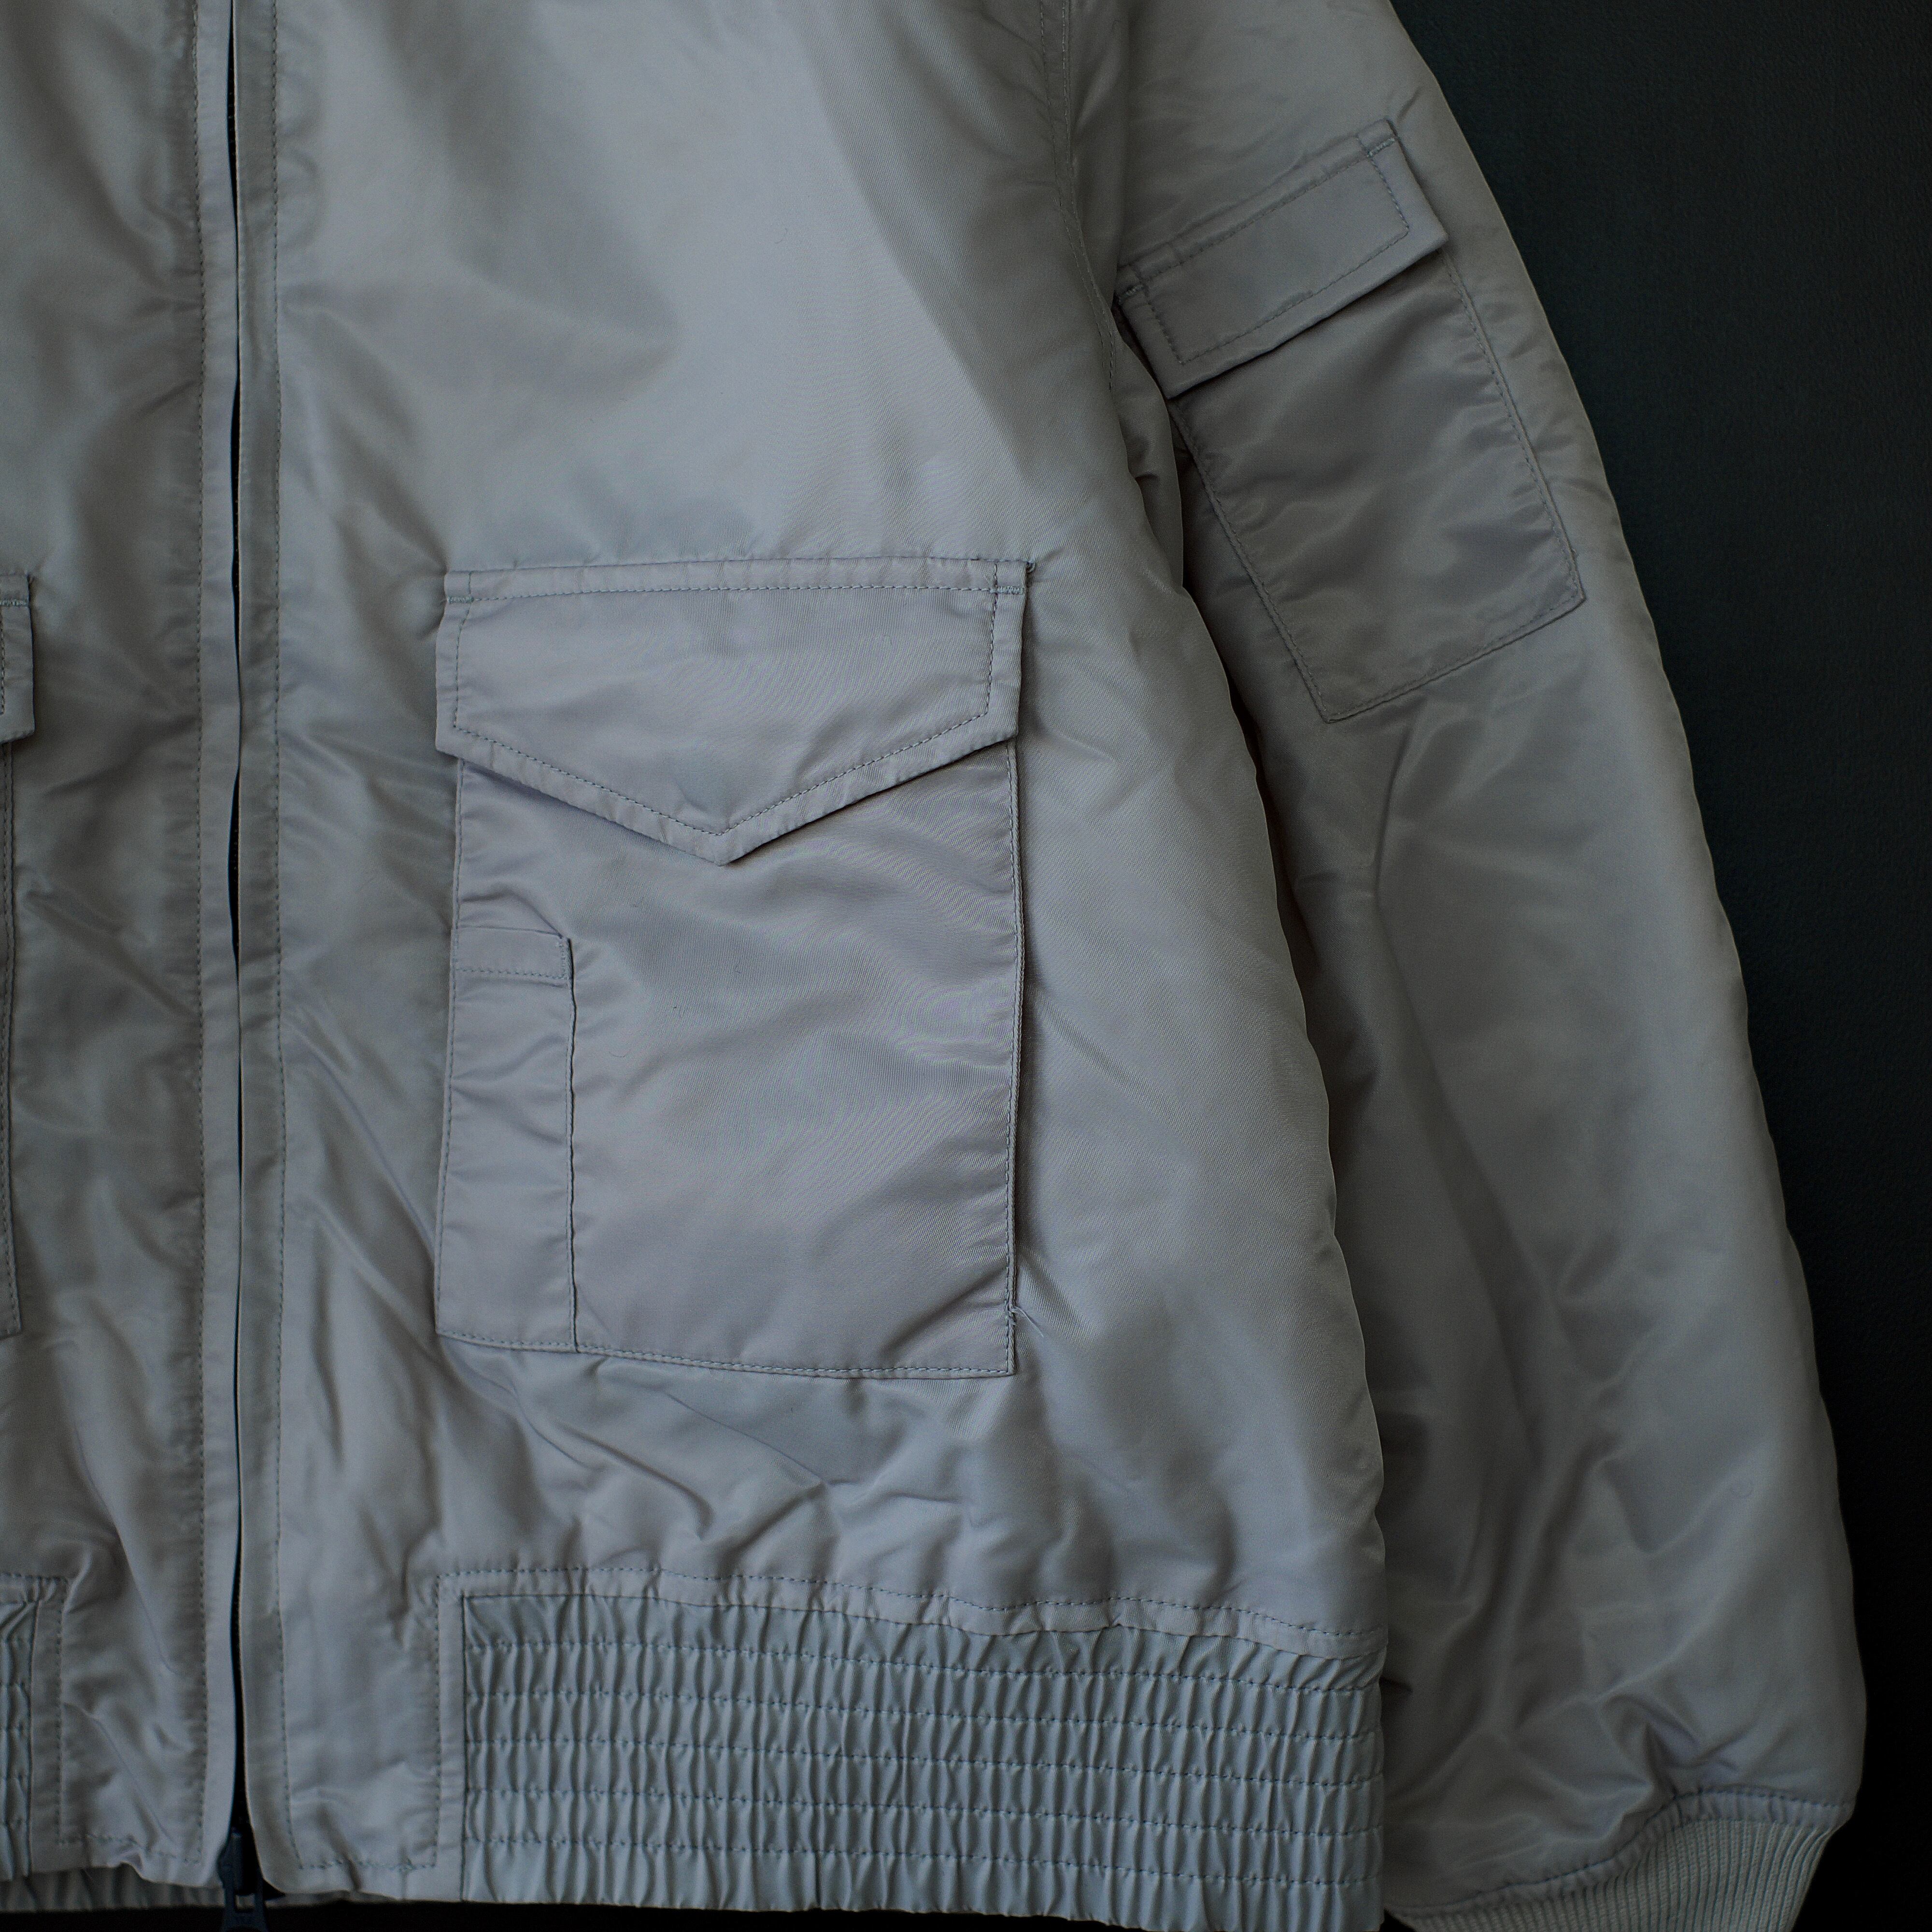 Universal Style Wear】A-1 type jacket (gray) | dros dro